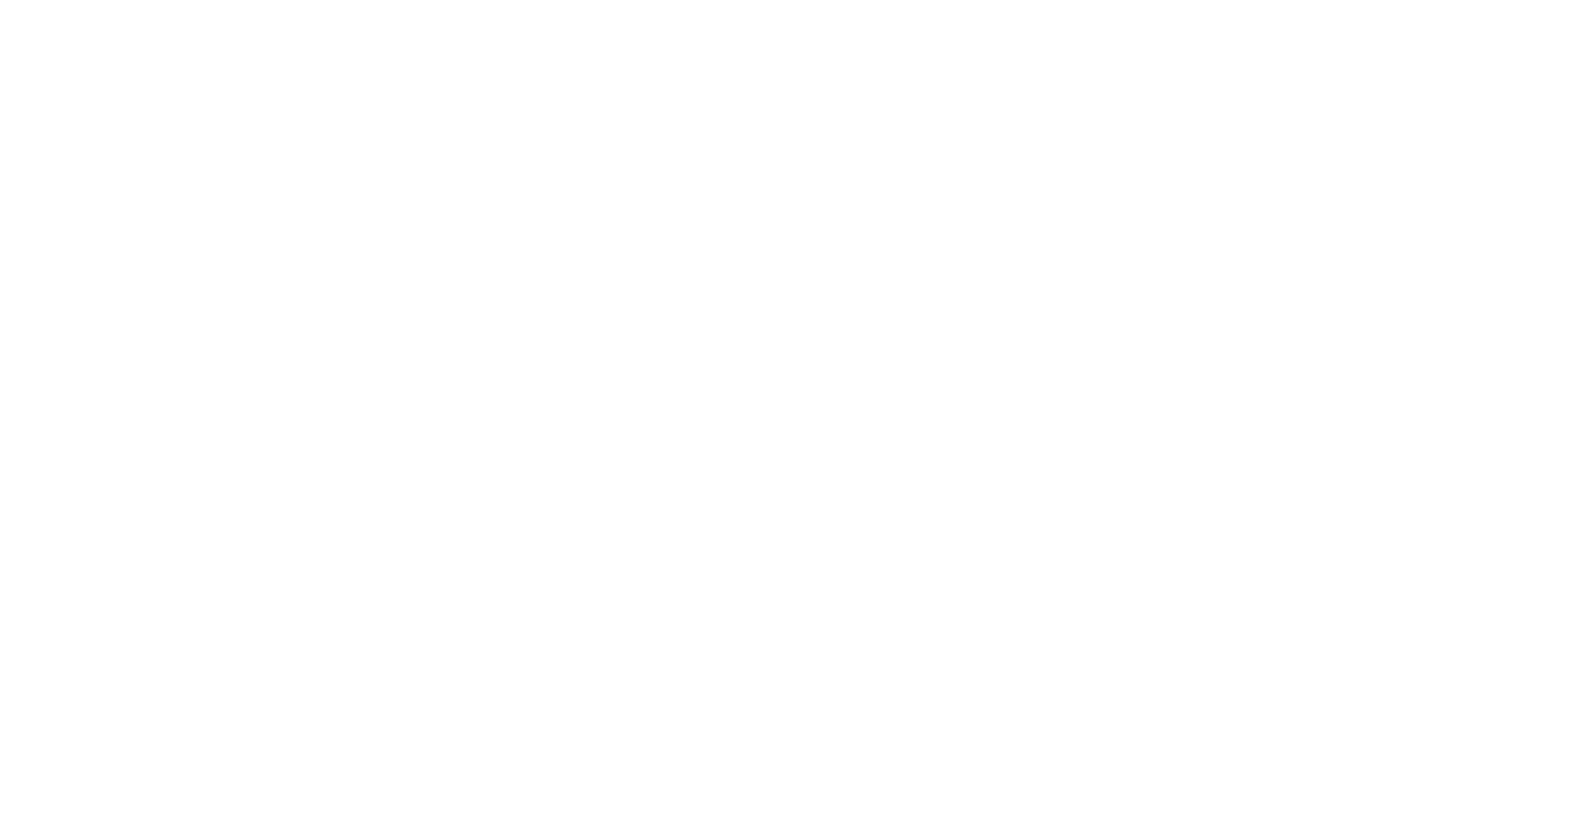 Max Paving